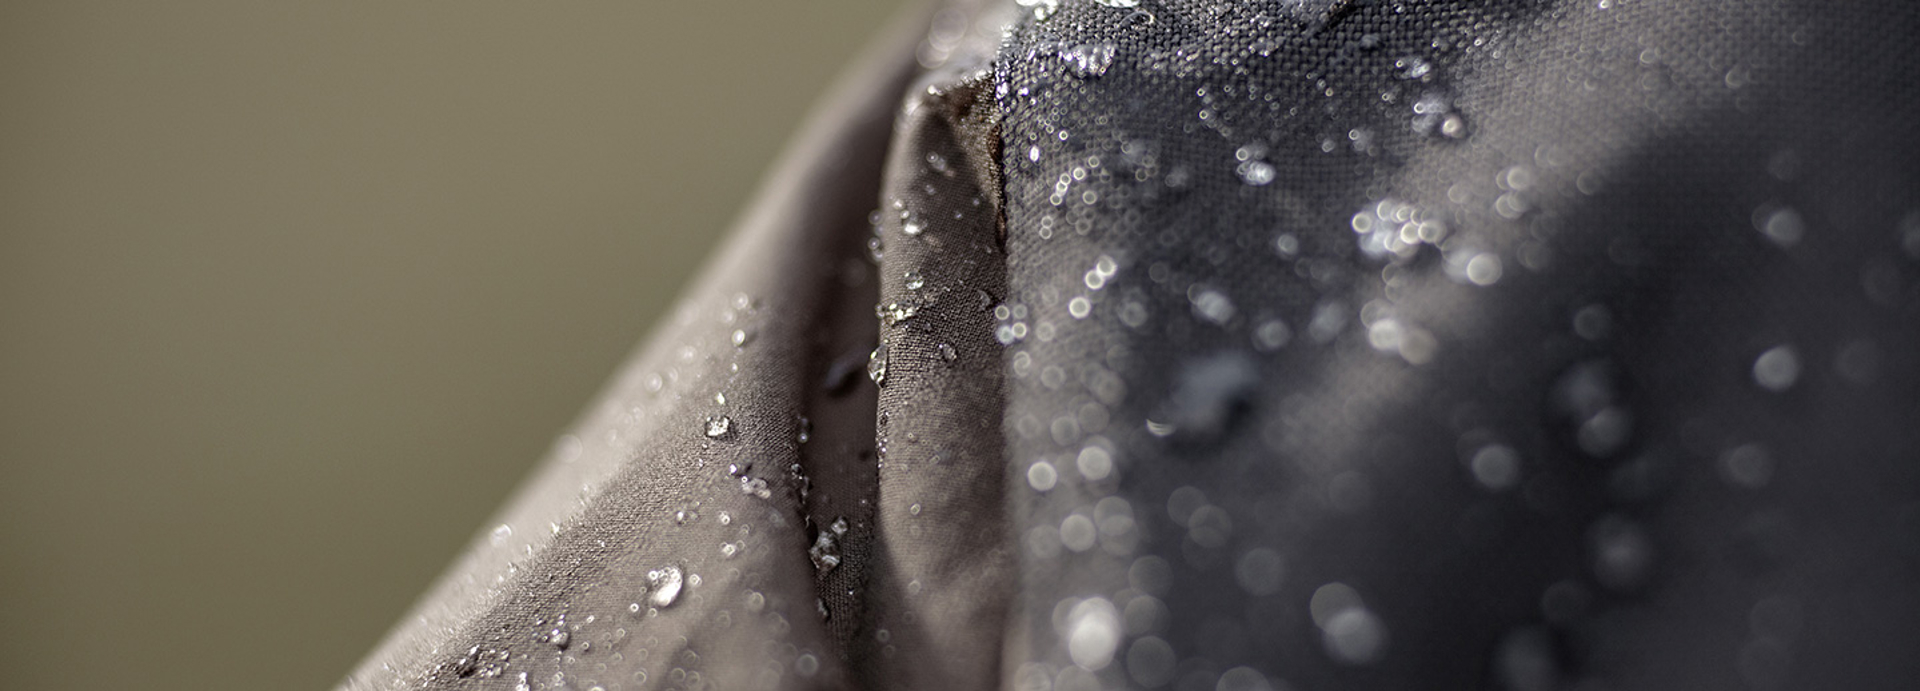 Closeup of fabric repelling water